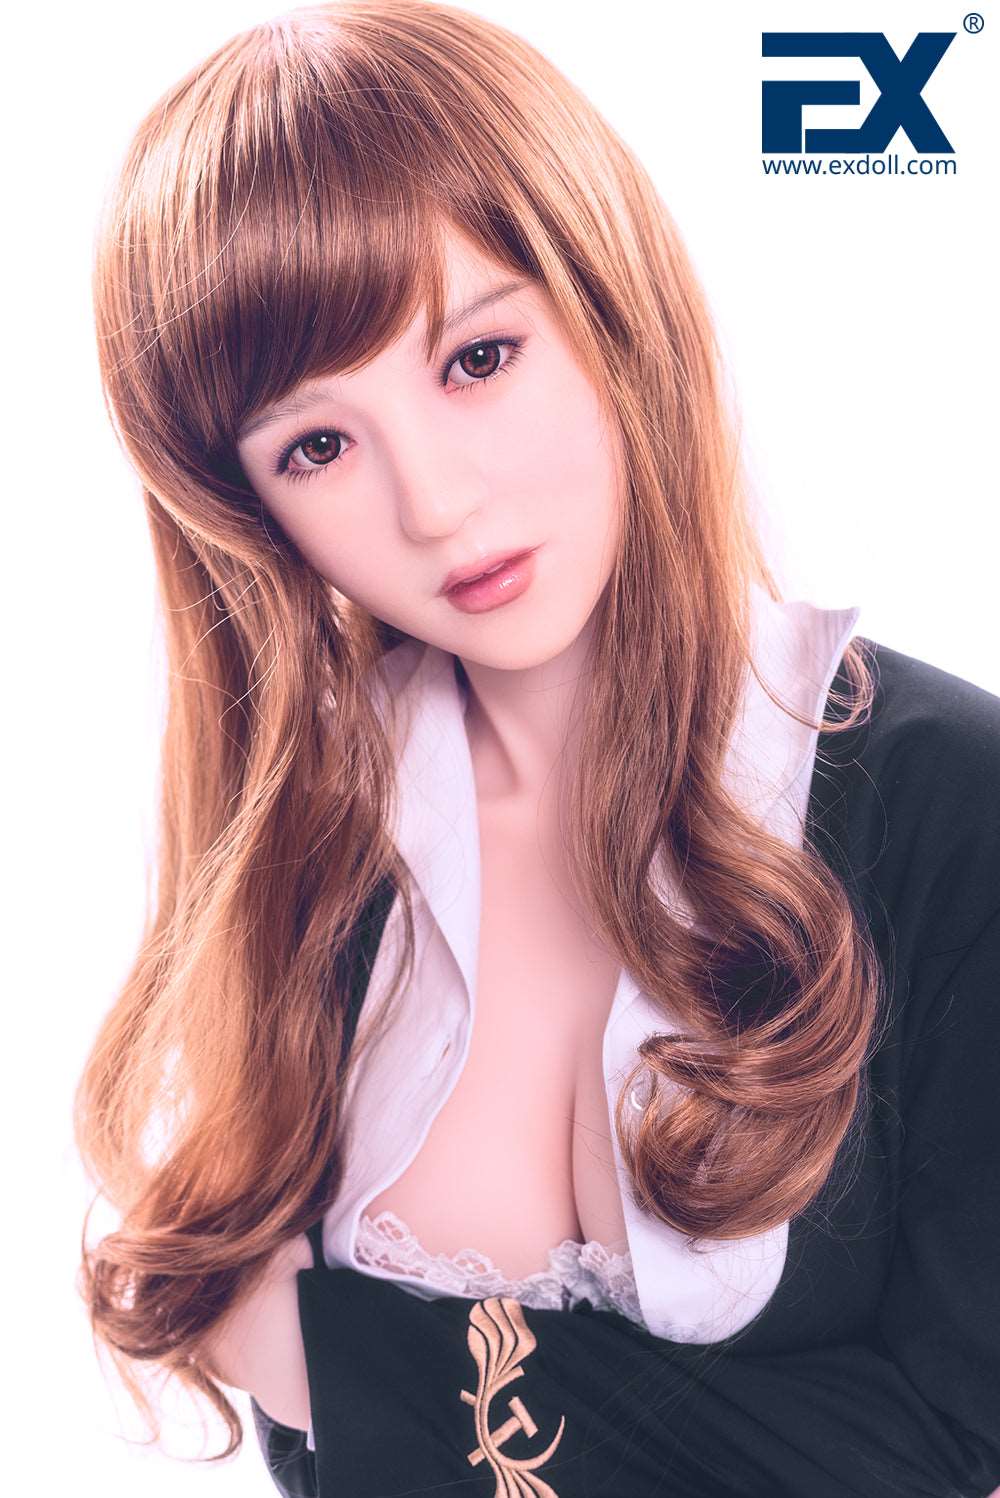 EX Doll Ukiyoe Series 170 cm Silicone - Yuan Yuan | Sex Dolls SG